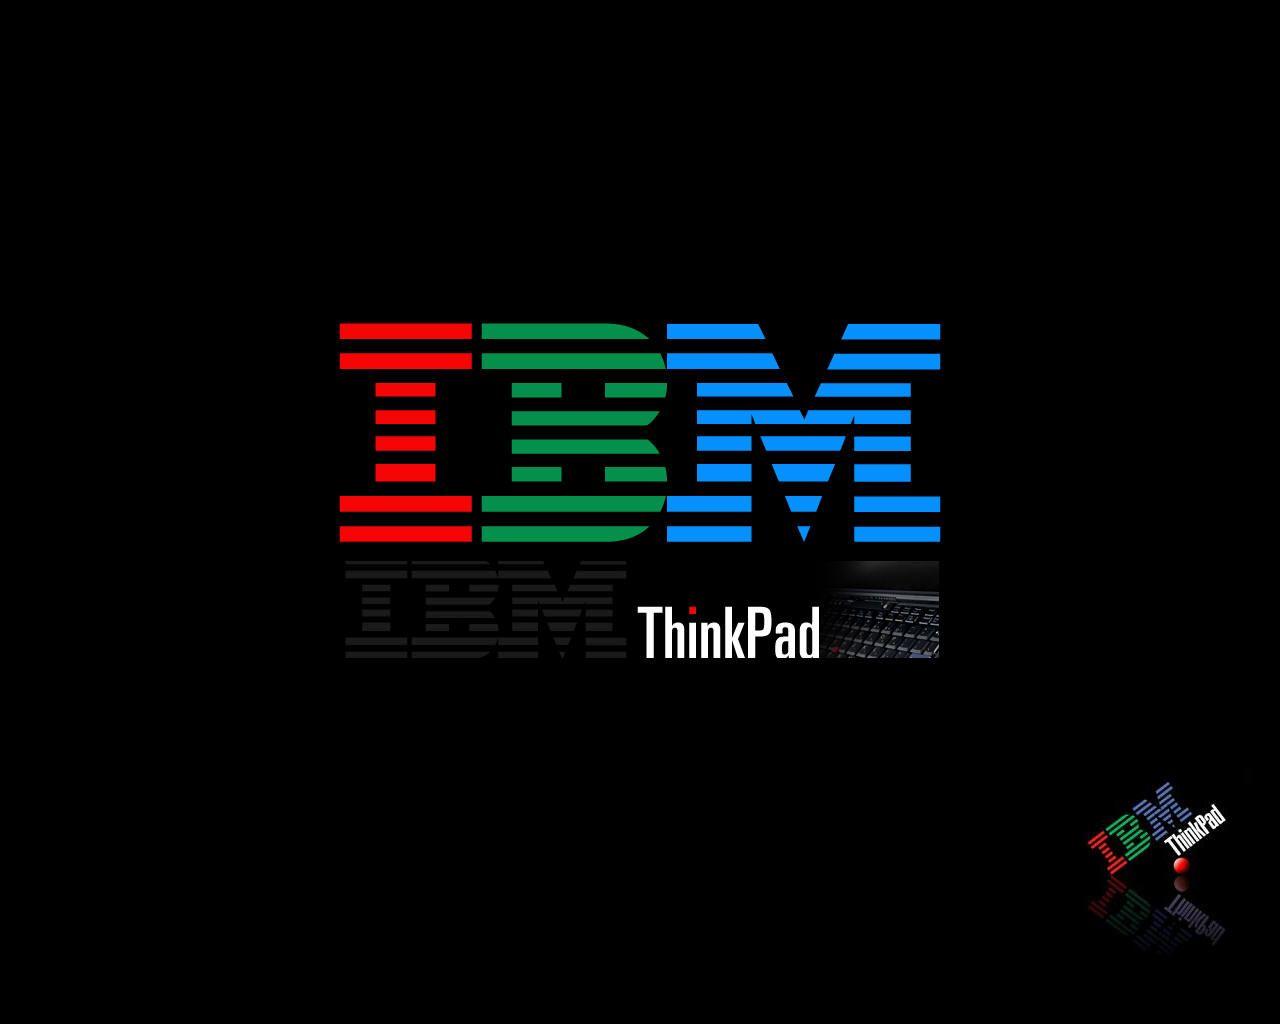 Ibm Thinkpad Wallpapers Top Free Ibm Thinkpad Backgrounds Wallpaperaccess